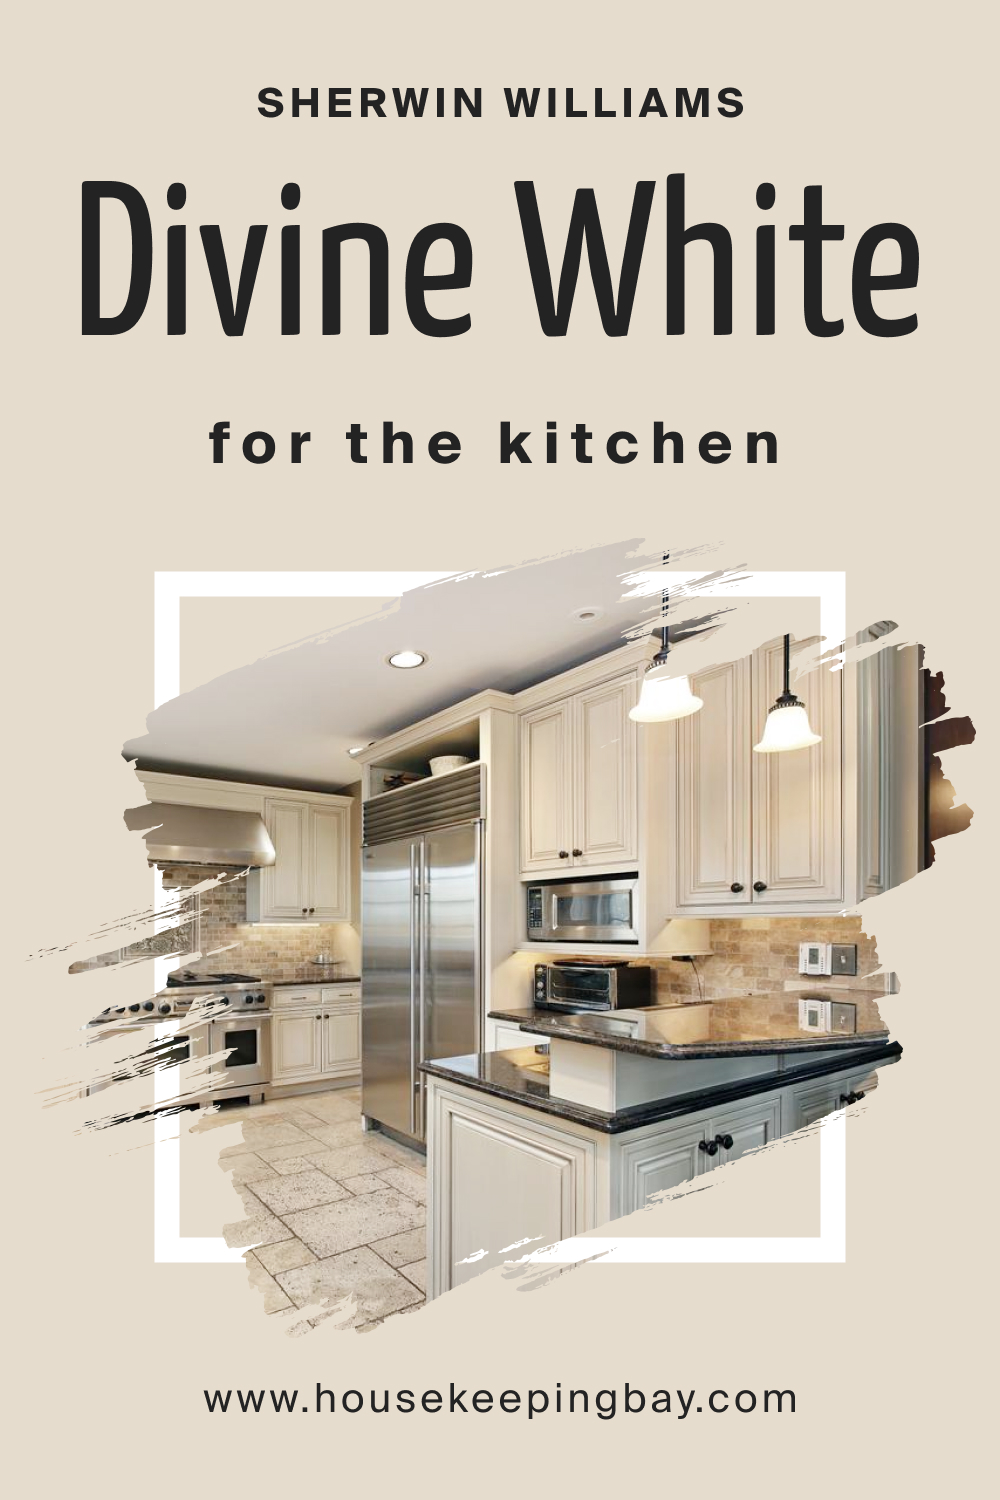 Sherwin Williams. SW Divine White For the Kitchen